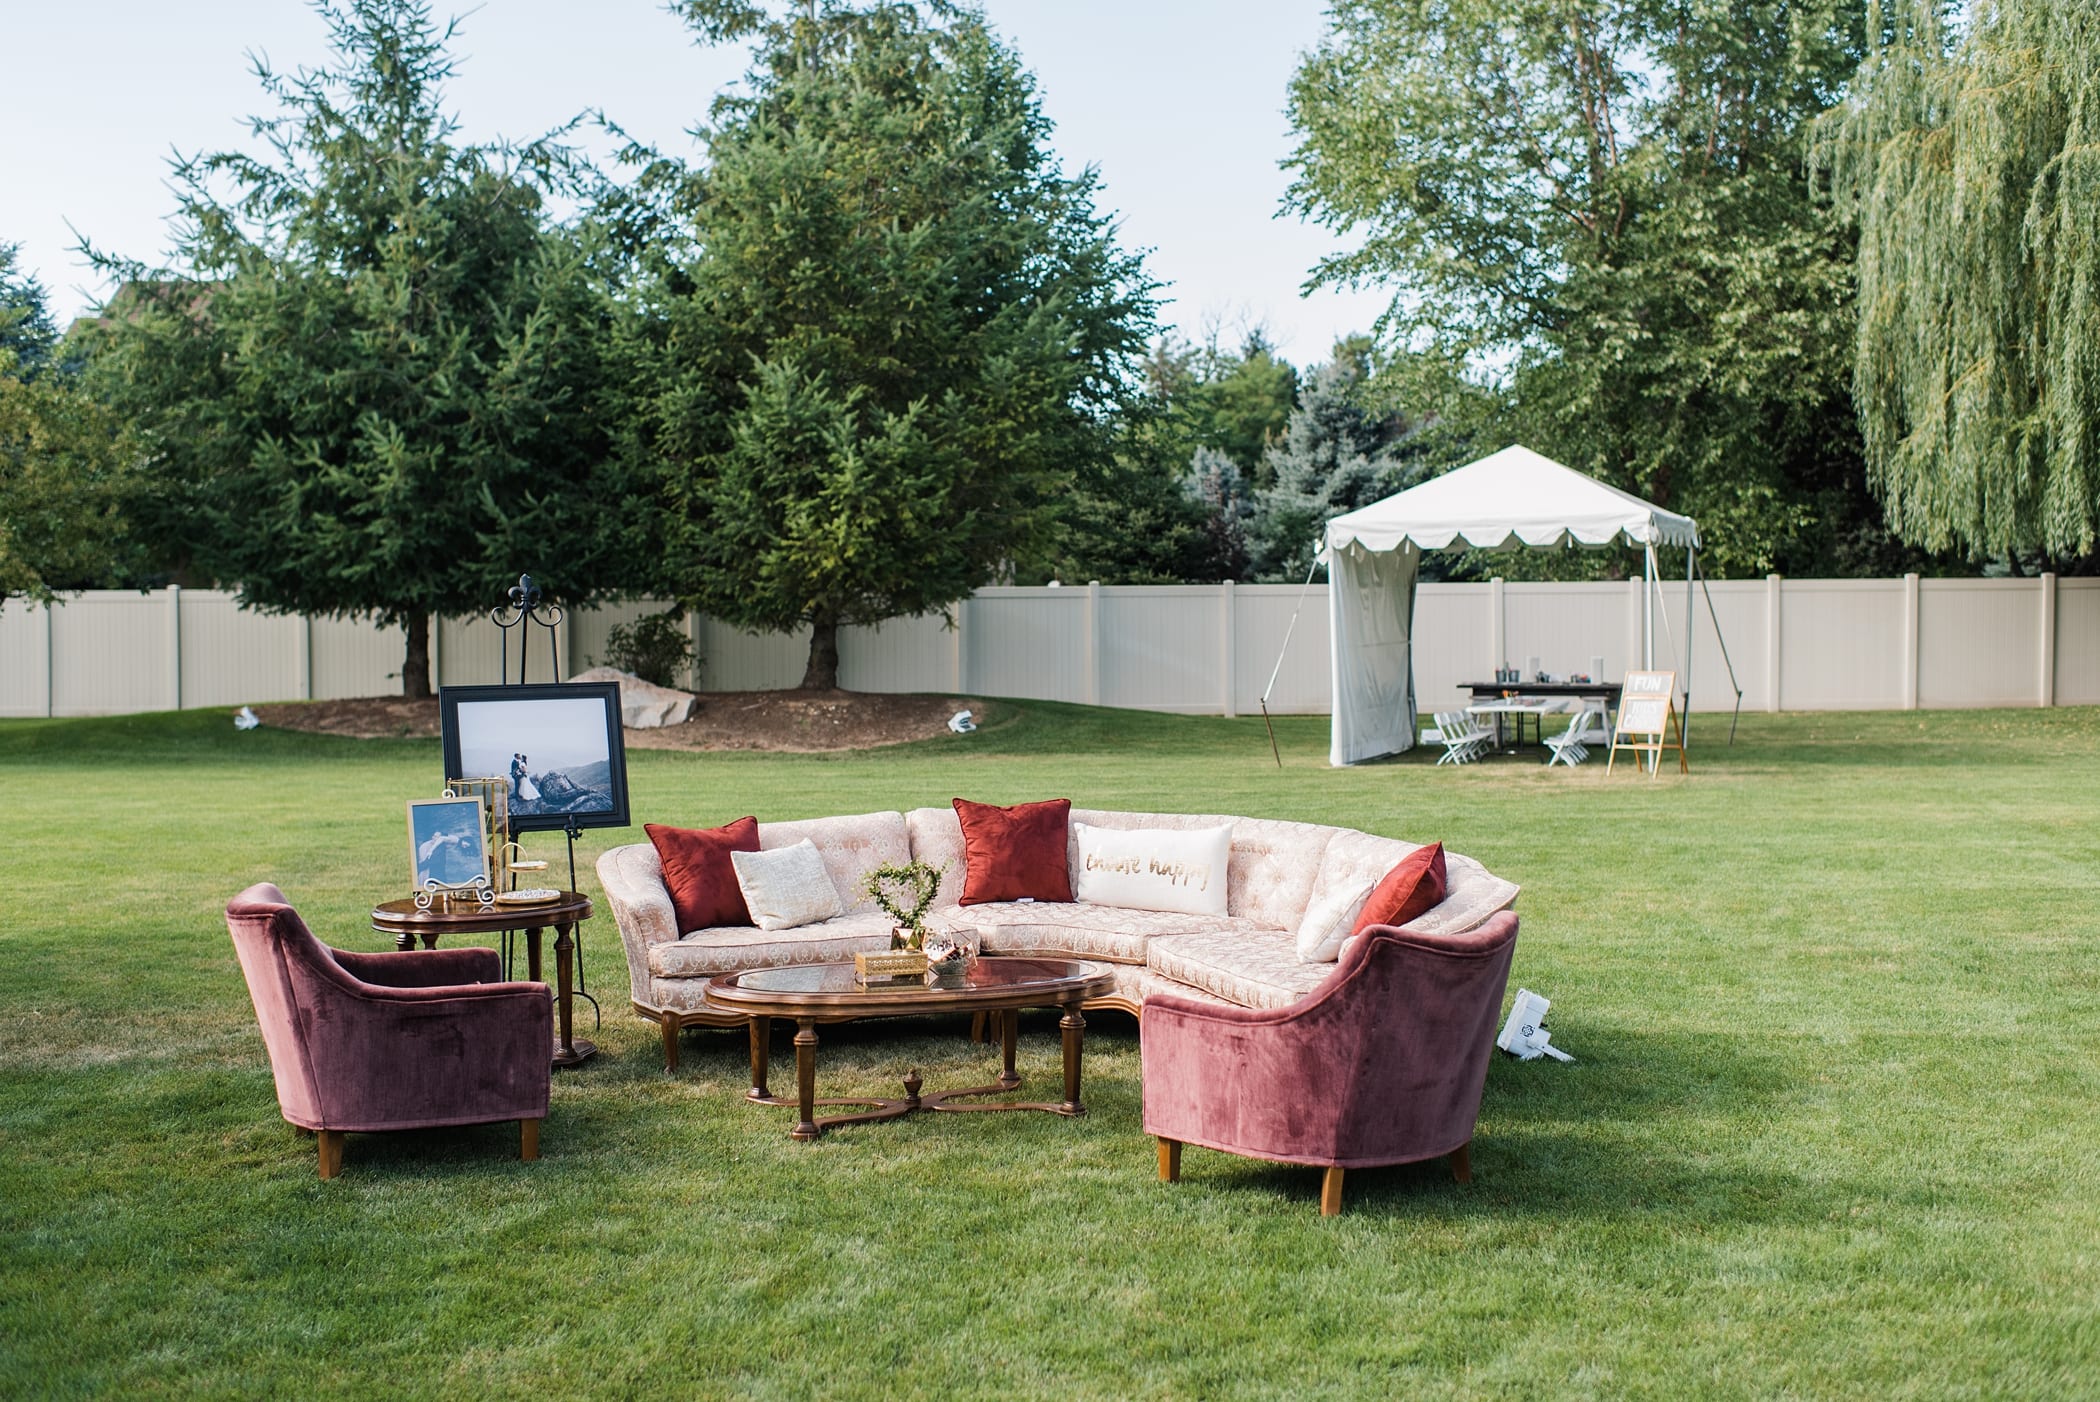 Outdoor backyard summer wedding reception in Eagle Idaho by Michelle & Logan